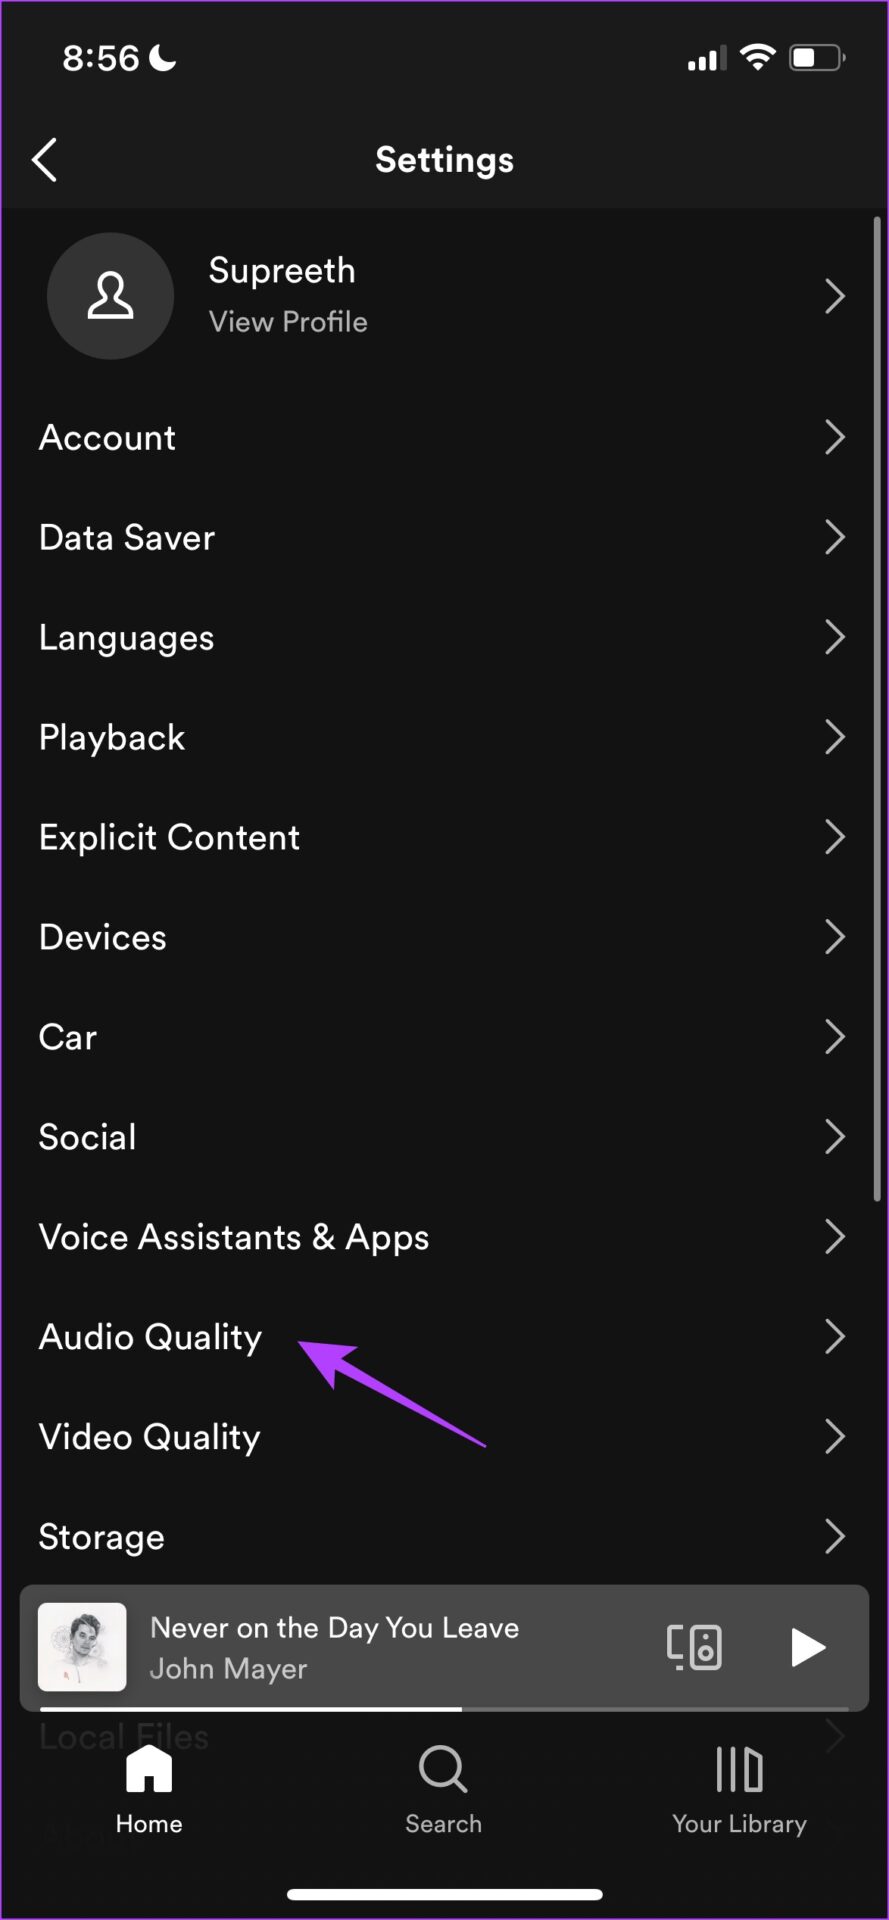 Select Audio Quality